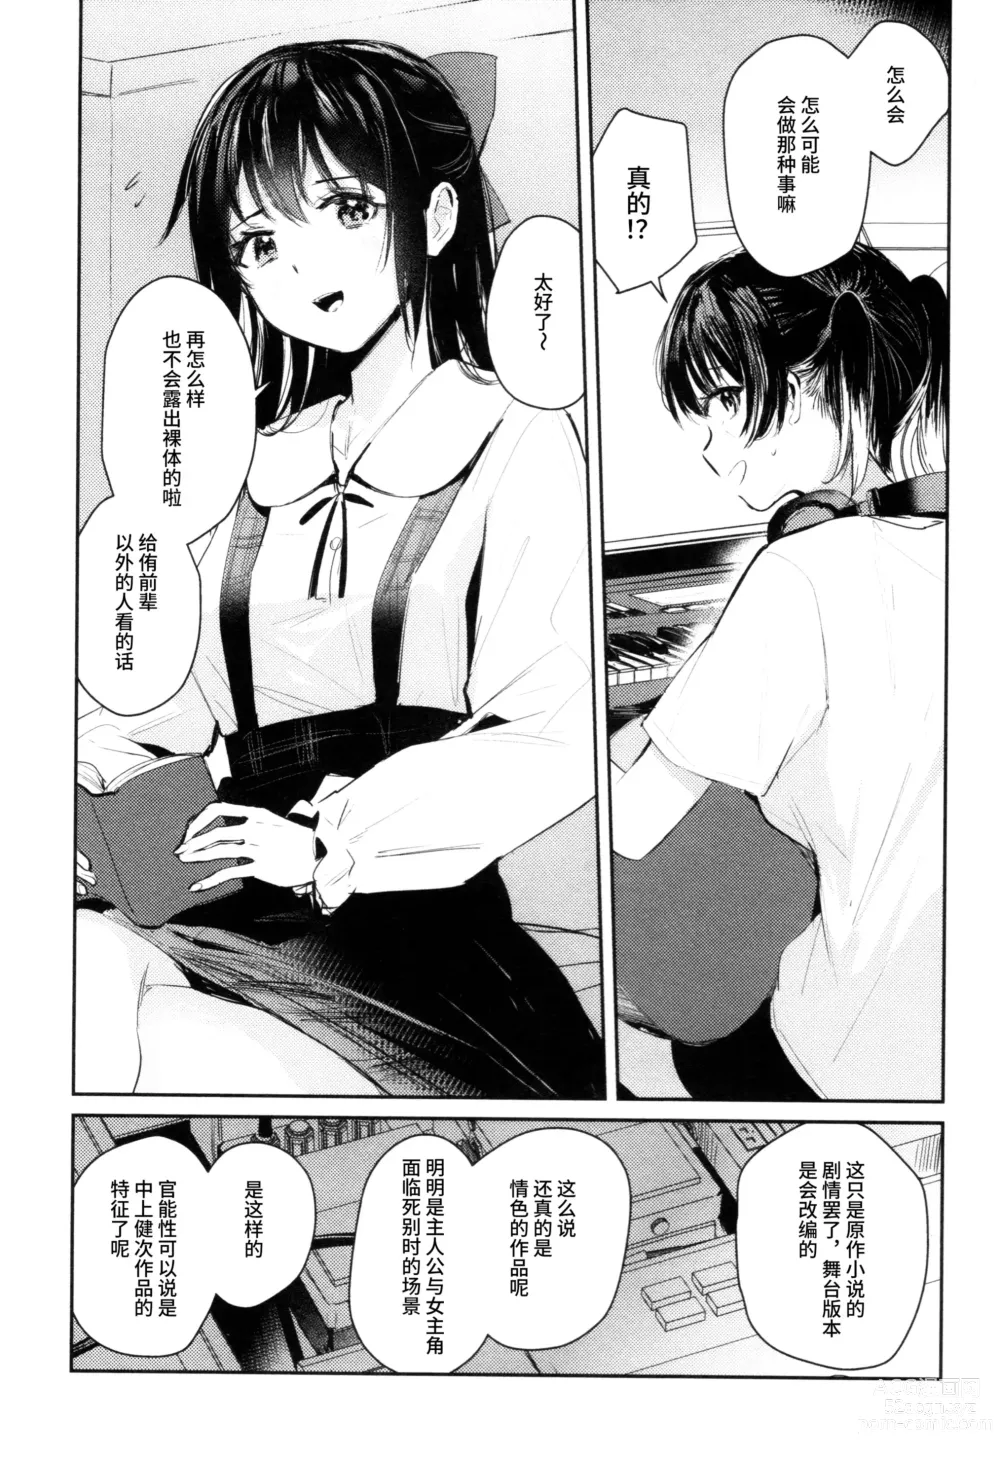 Page 4 of doujinshi 太过甜美的谢幕